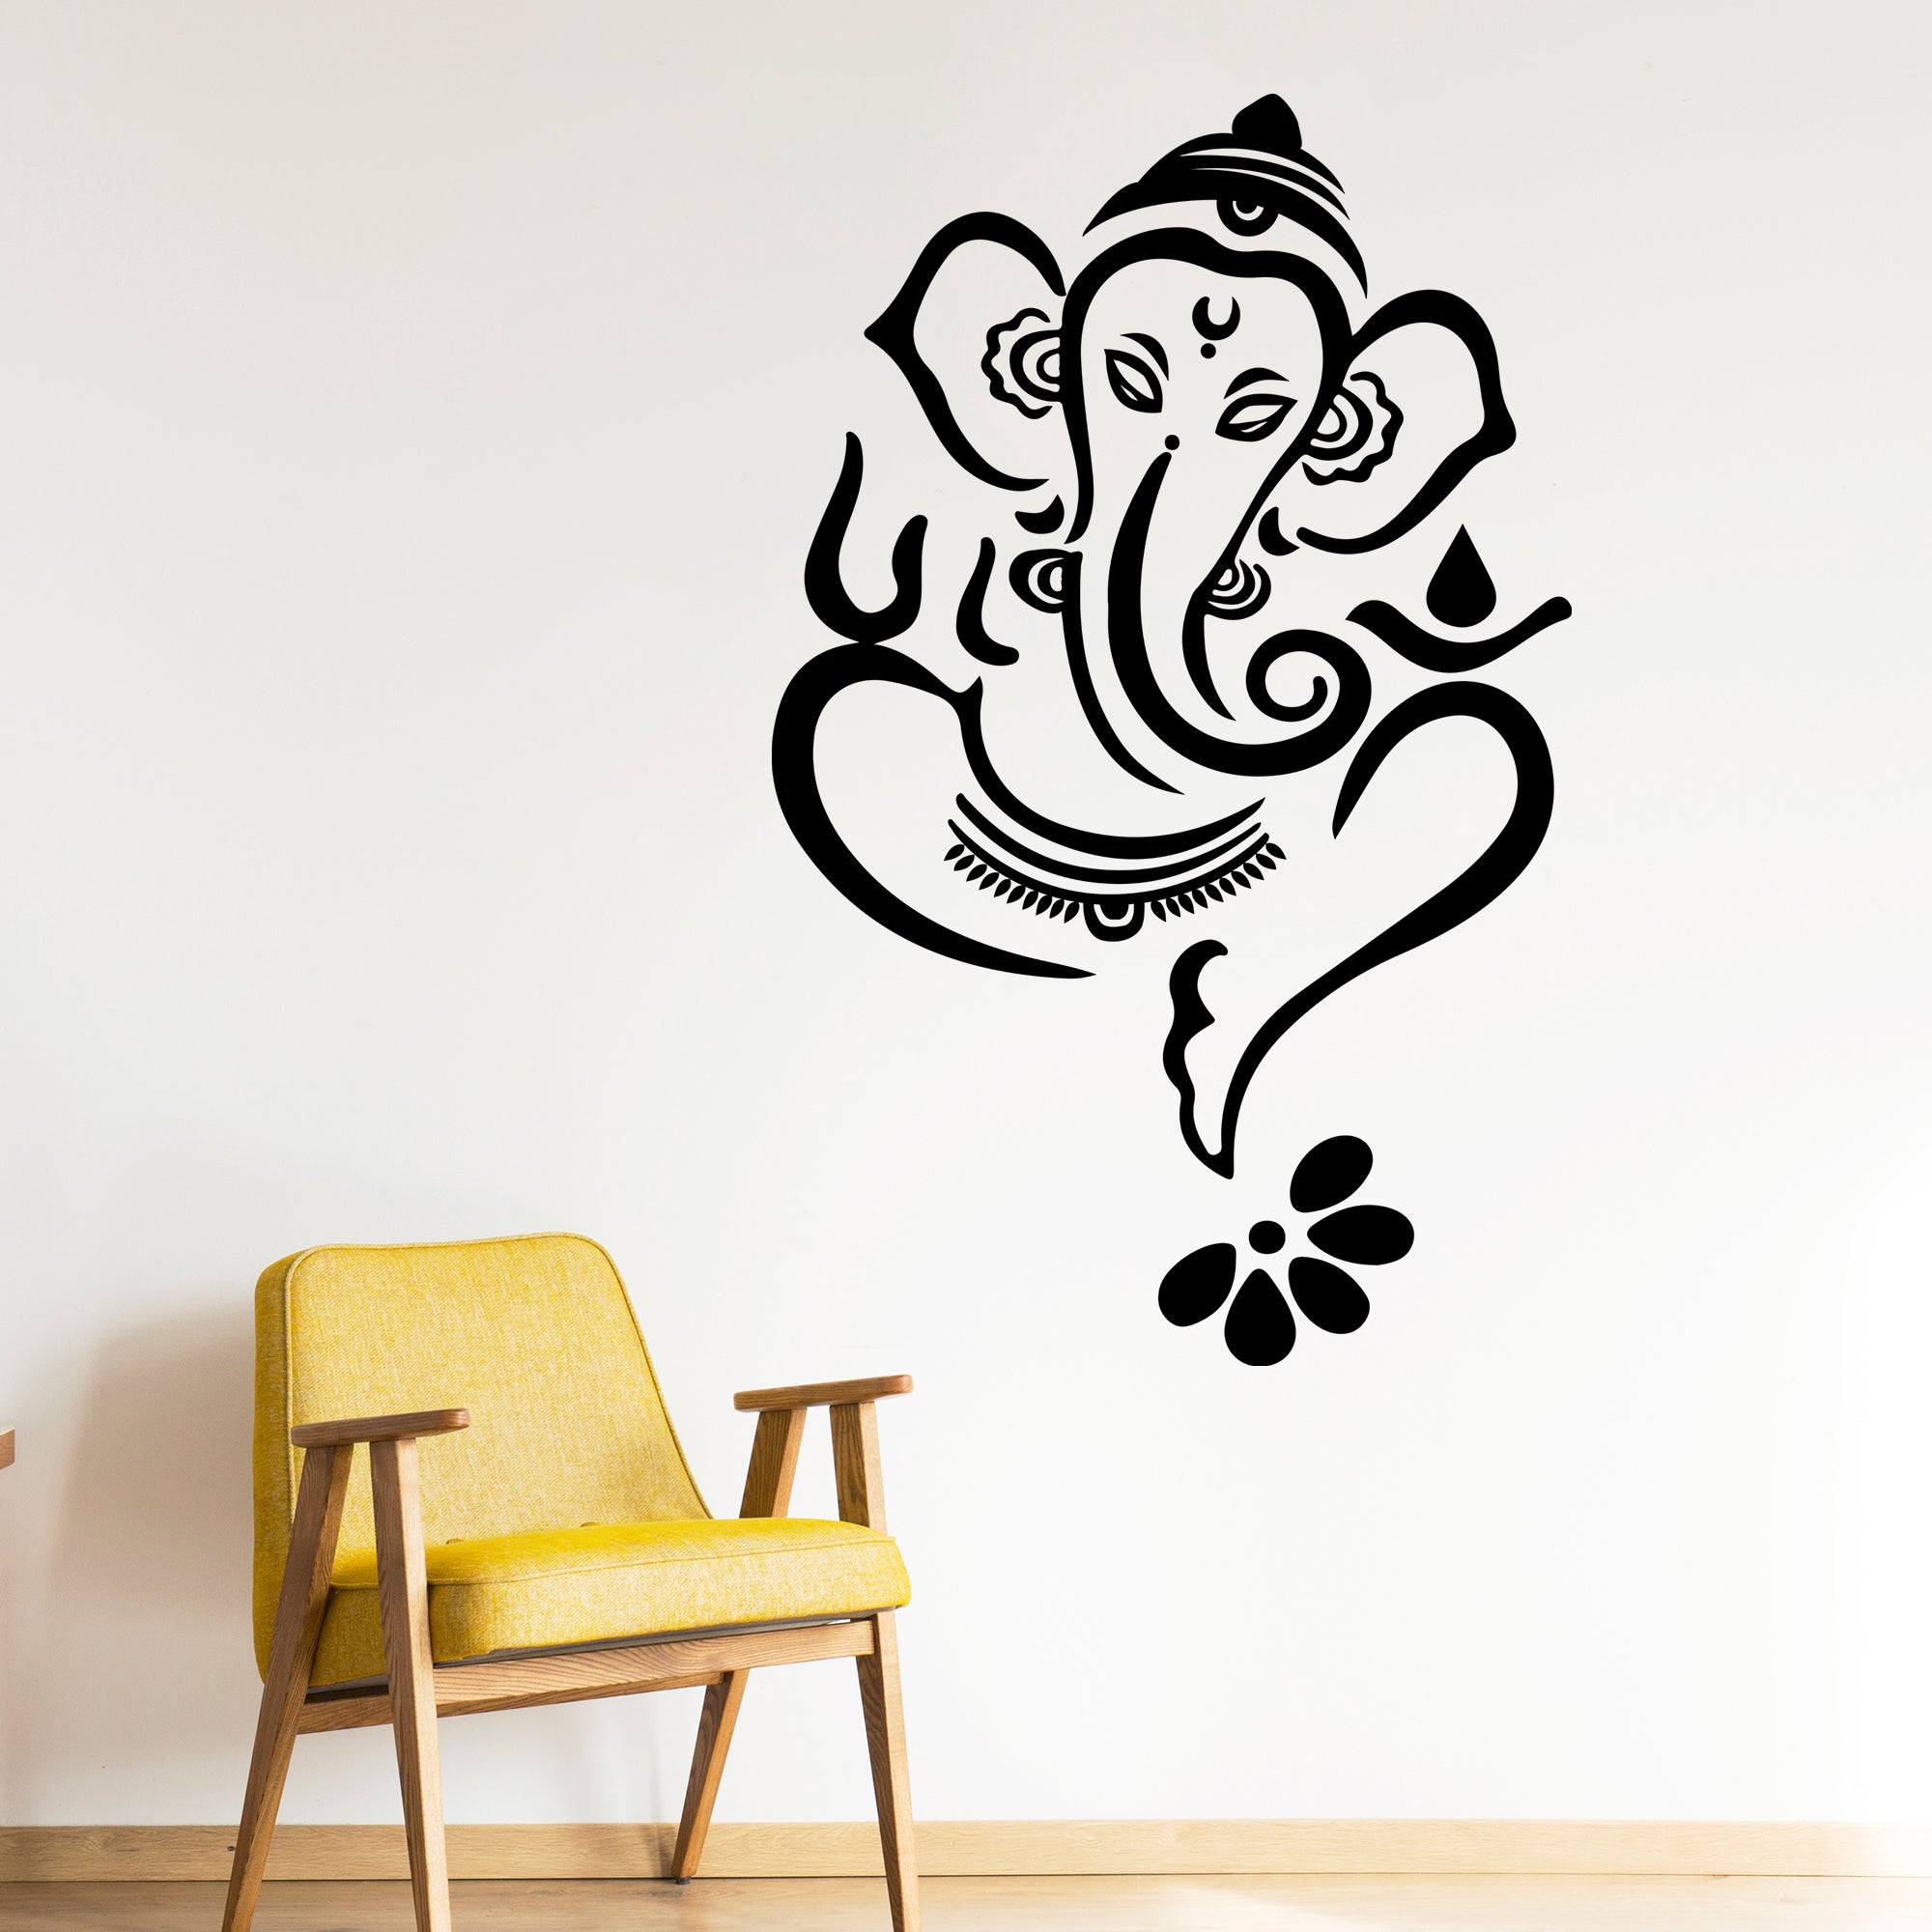  Ganesha Wall Sticker for Home